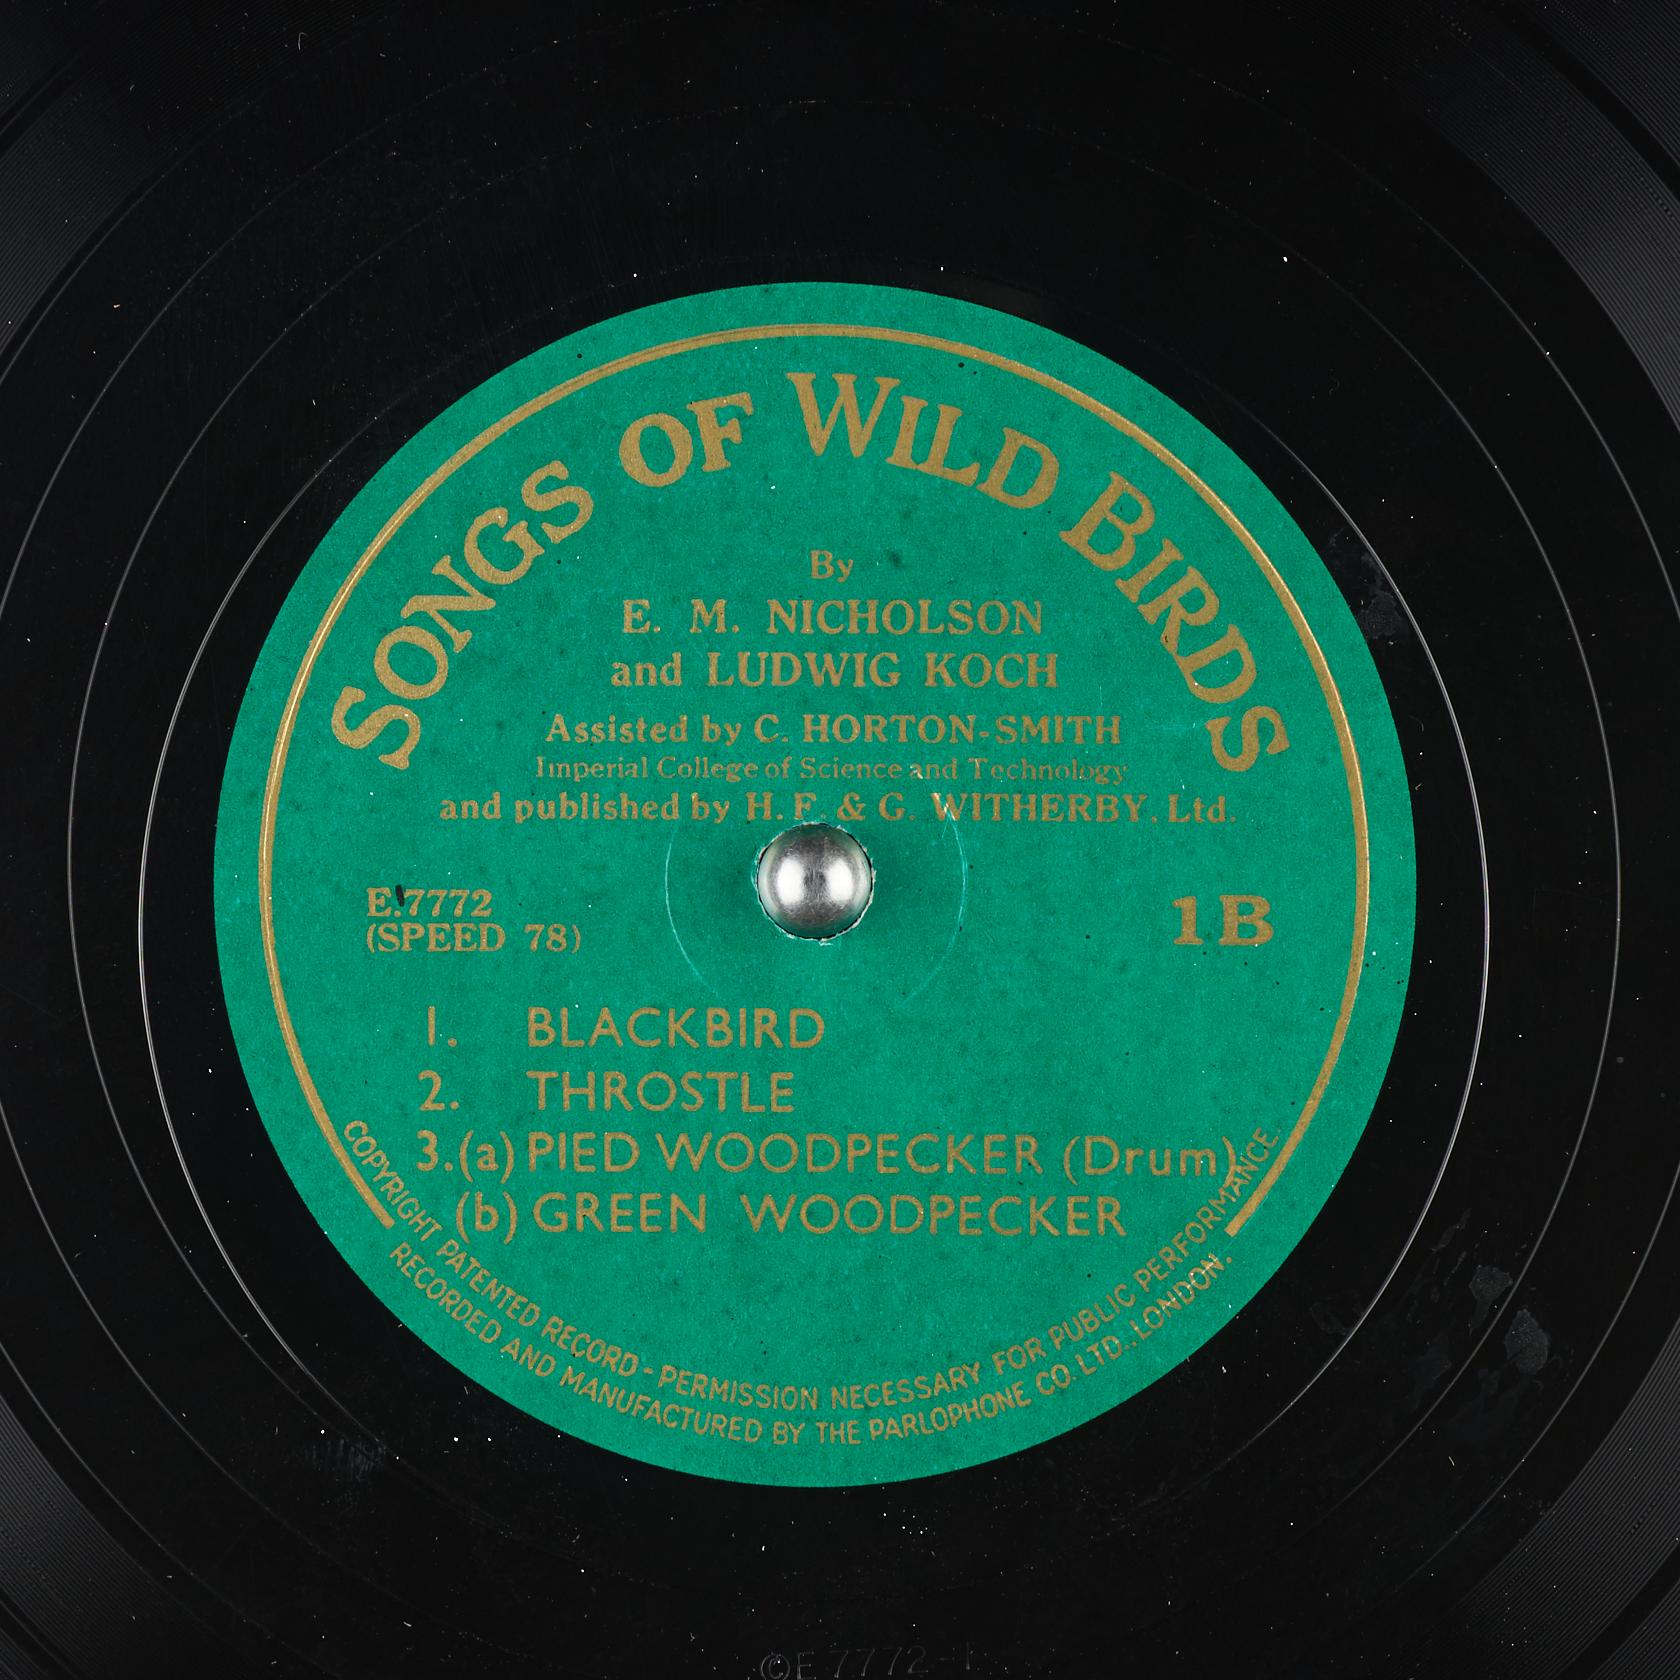 Songs of wild birds. Disc 1, Side B (E.7772)